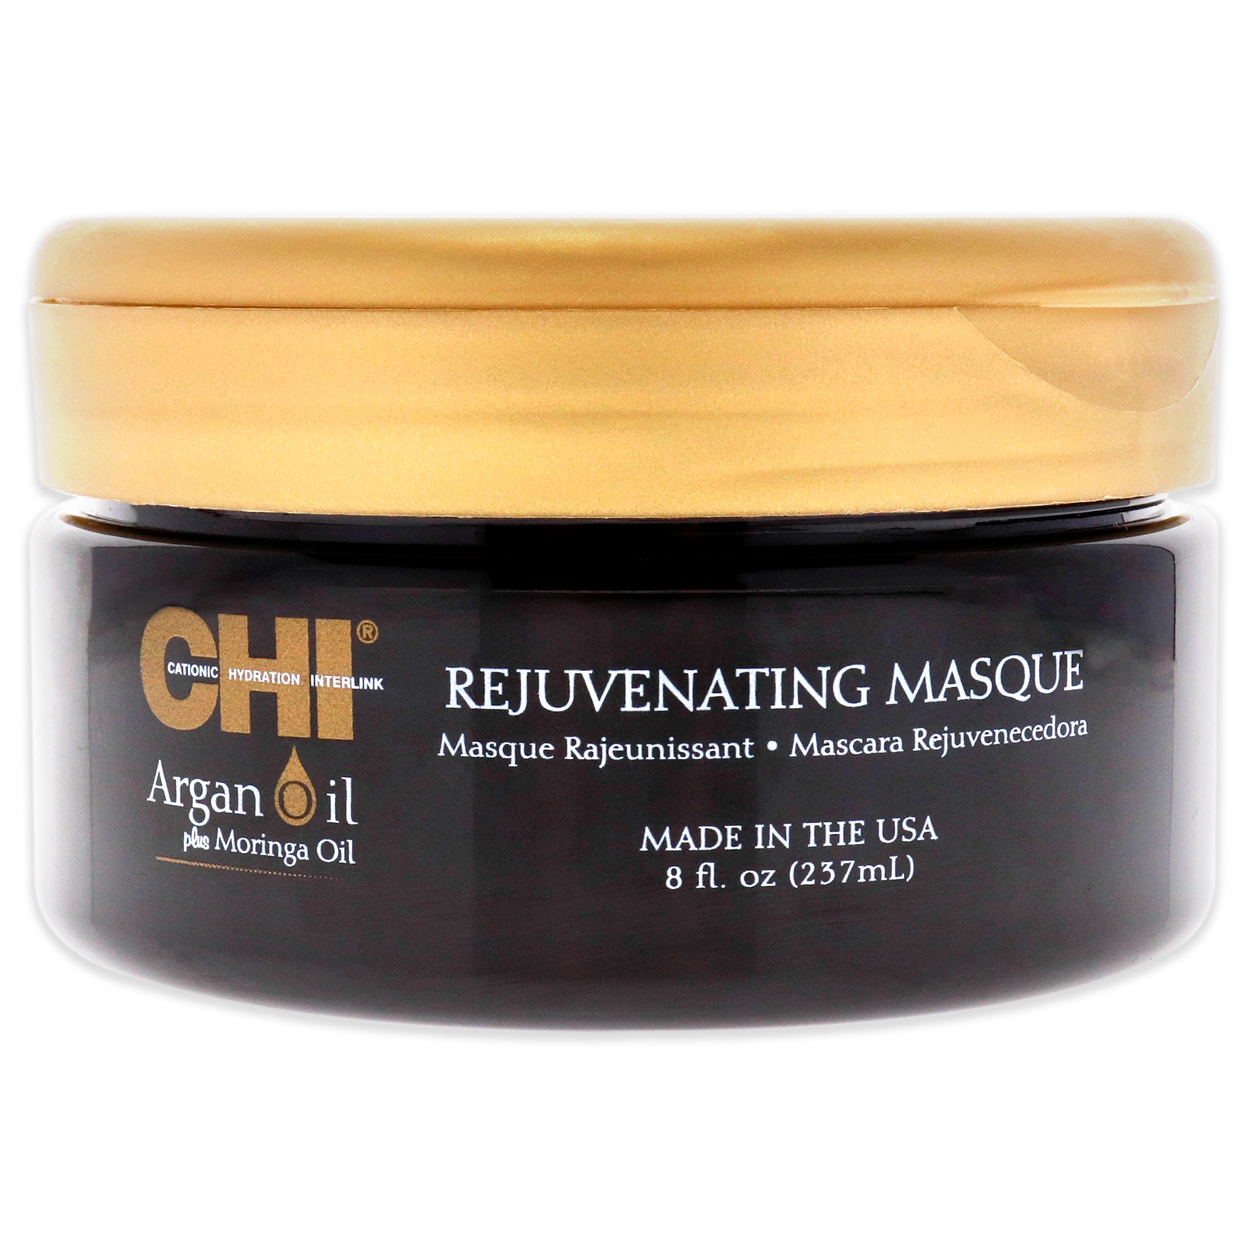 CHI Unisex HAIRCARE Argan Oil Plus Moringa Oil Rejuvenating Masque 8 Oz